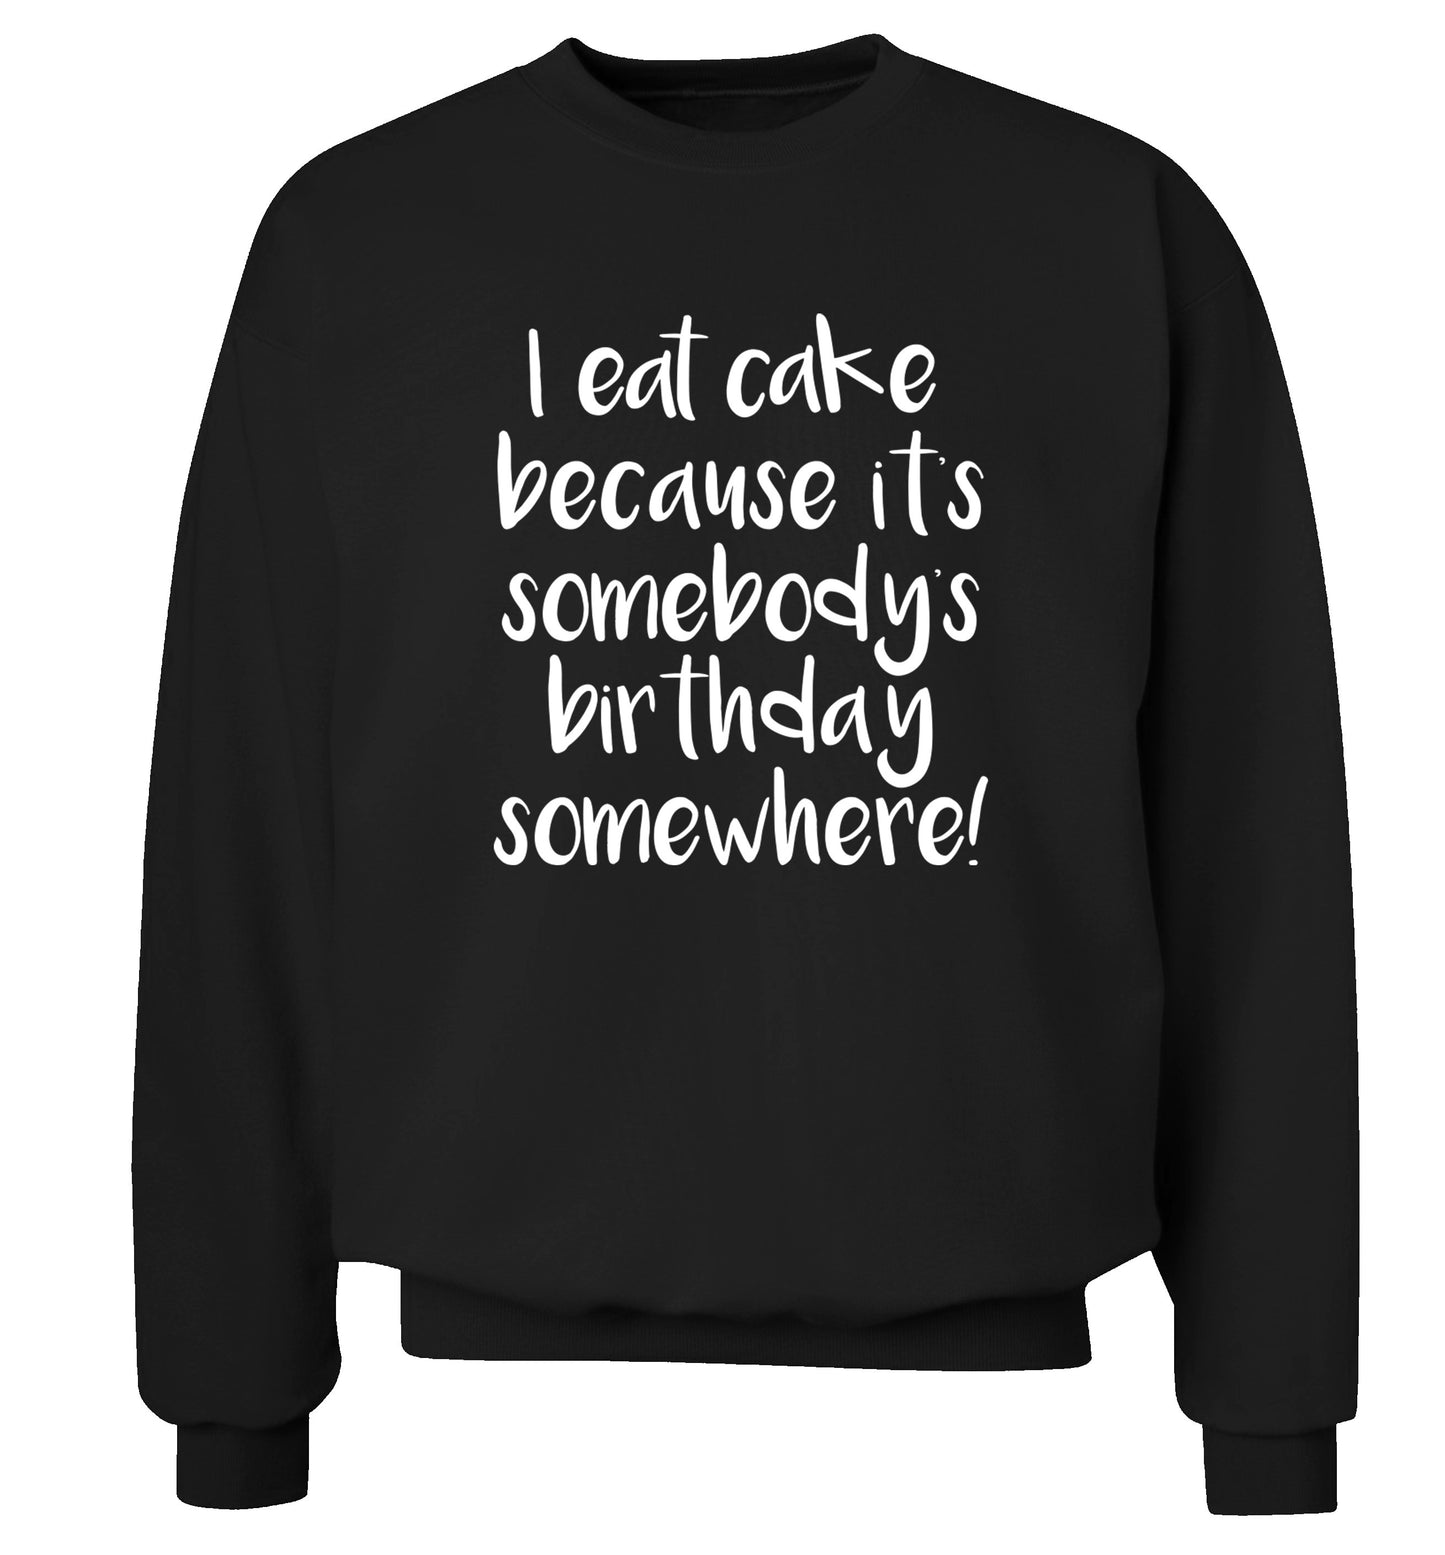 I eat cake because it's somebody's birthday somewhere! Adult's unisex black Sweater 2XL